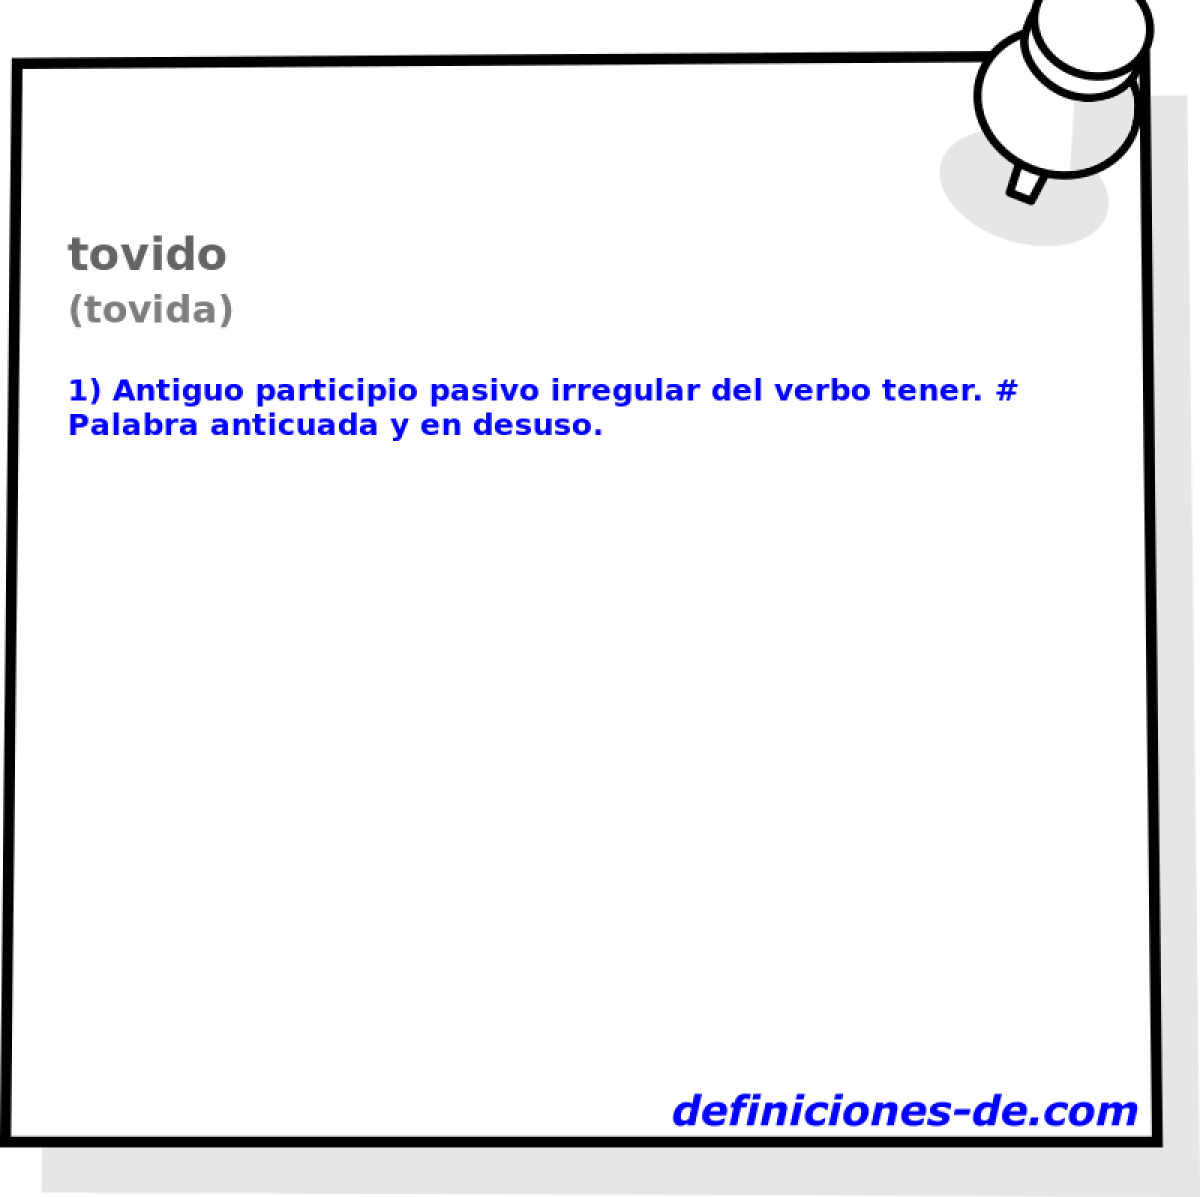 tovido (tovida)